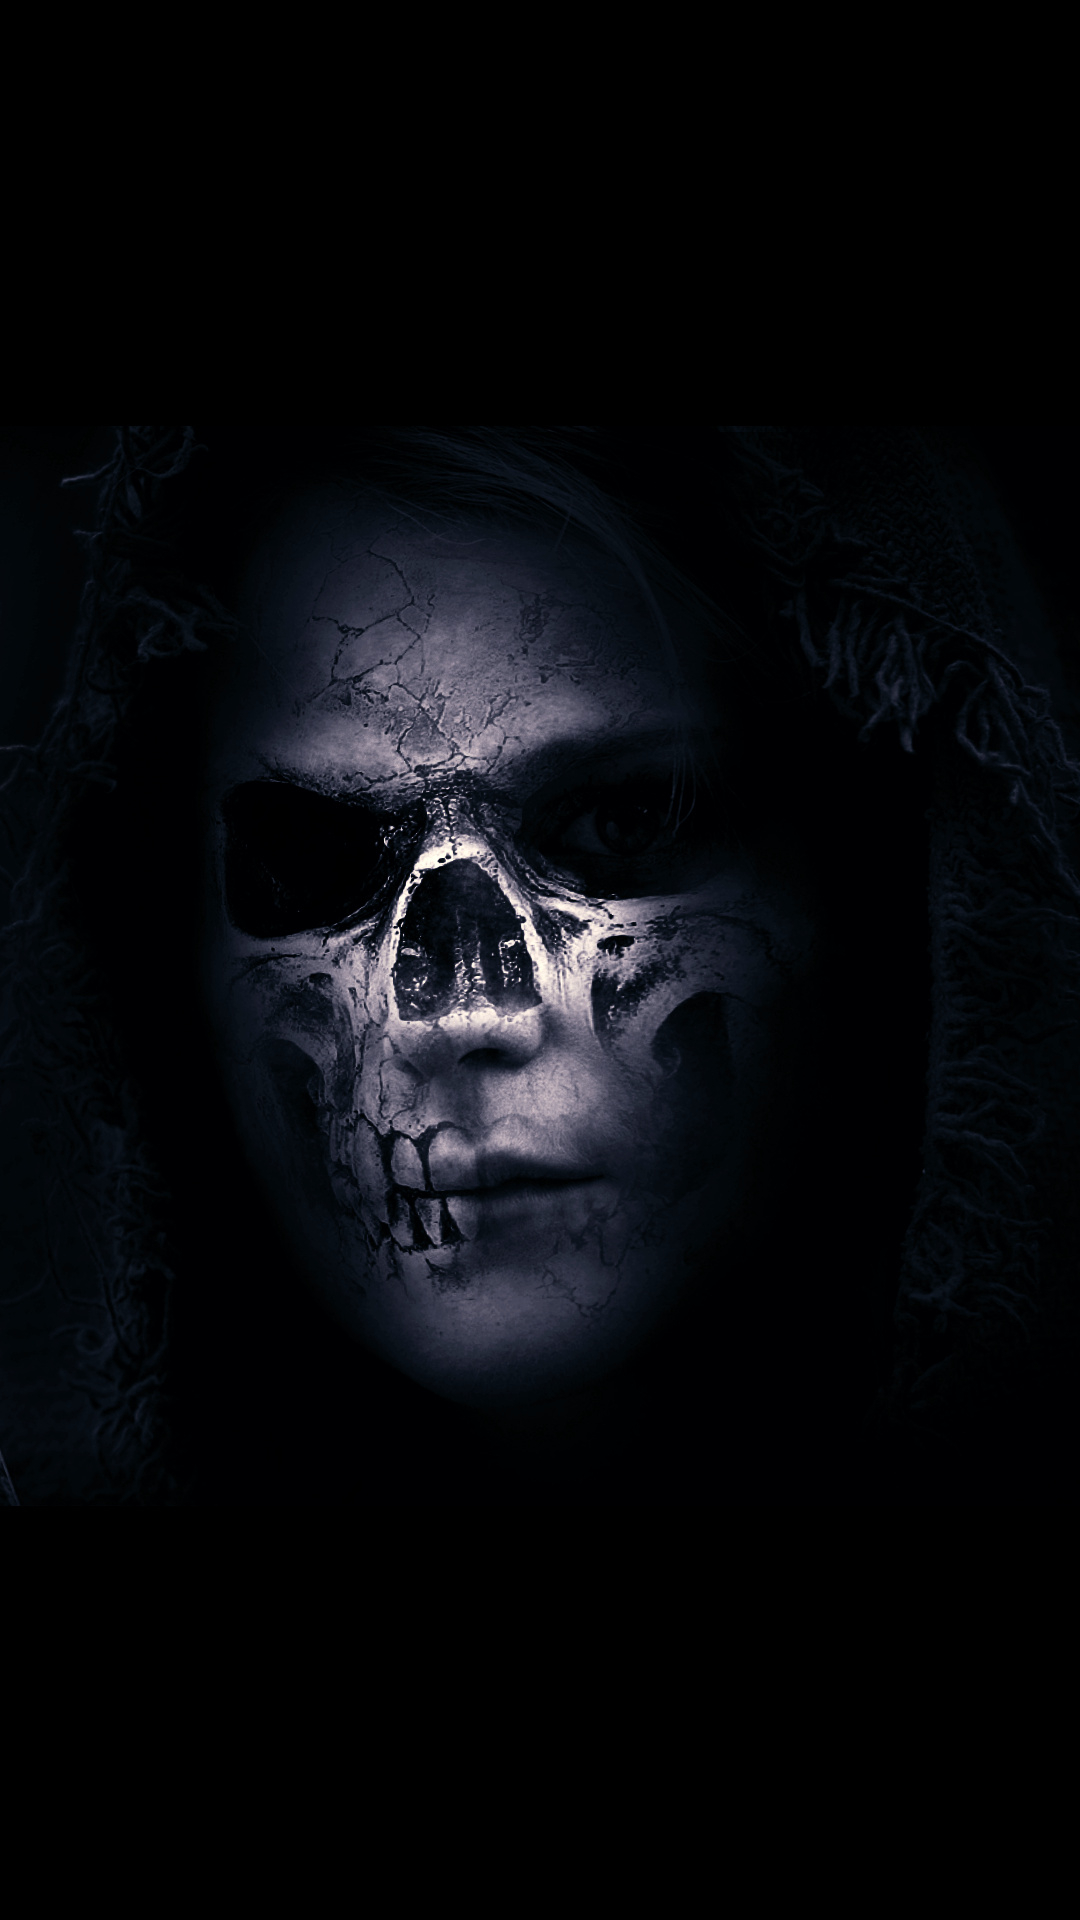 Gothic Art: Undead, Death mask, Scull, Creepy face, Bones, Dark illustration. 1080x1920 Full HD Background.